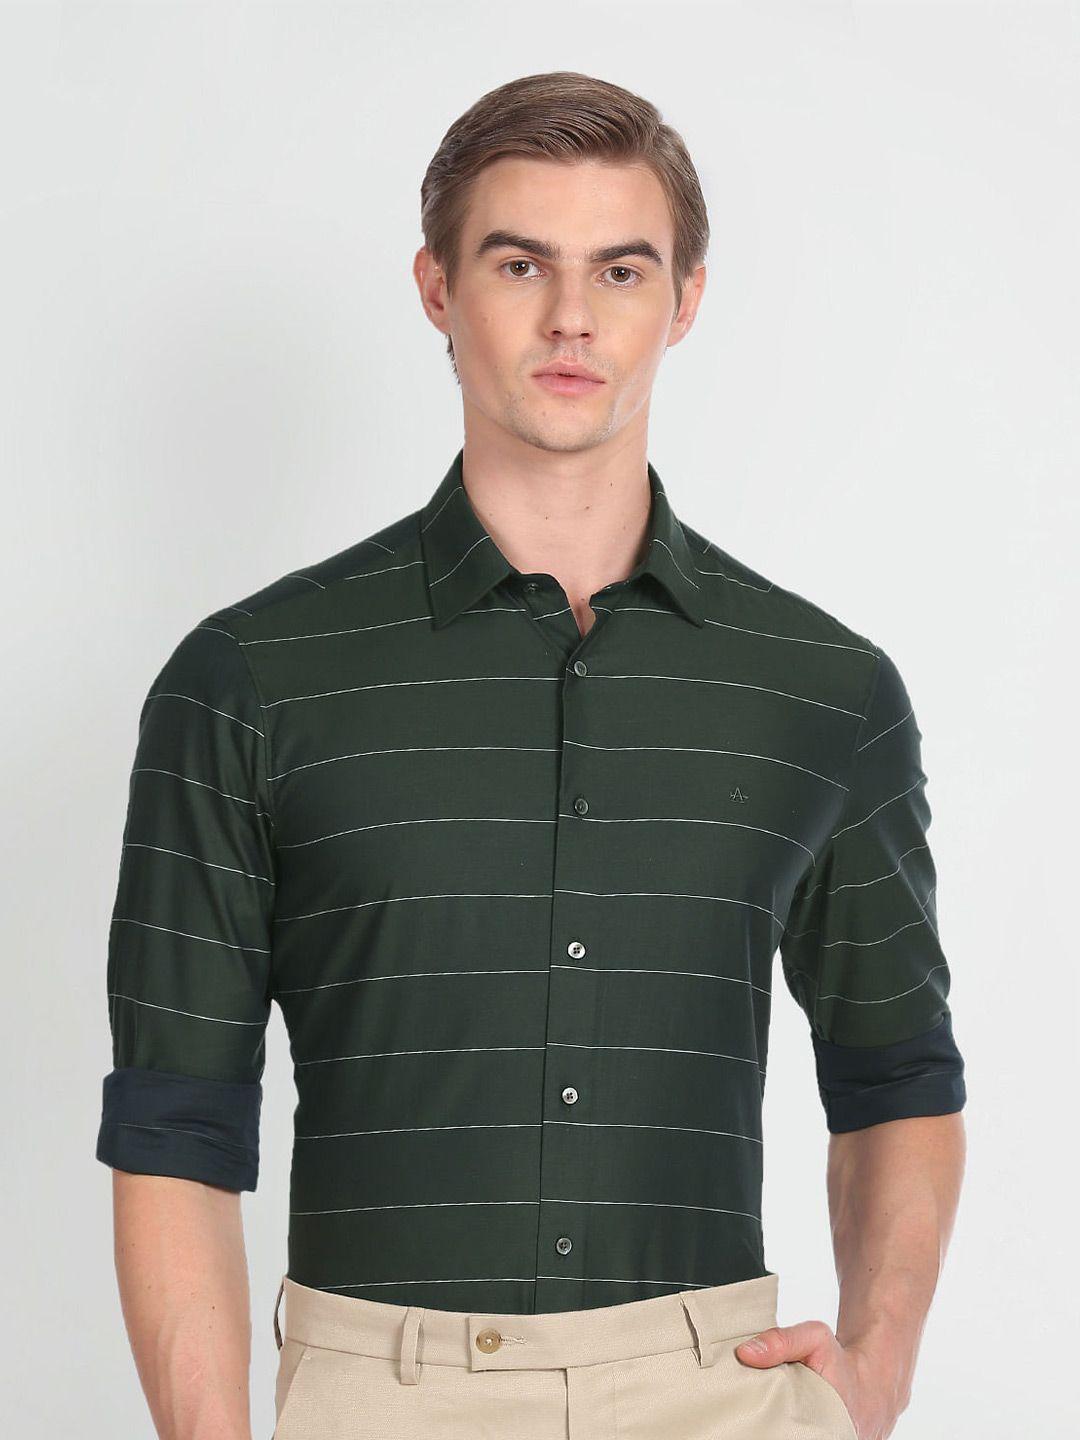 arrow horizontal striped pure cotton casual shirt